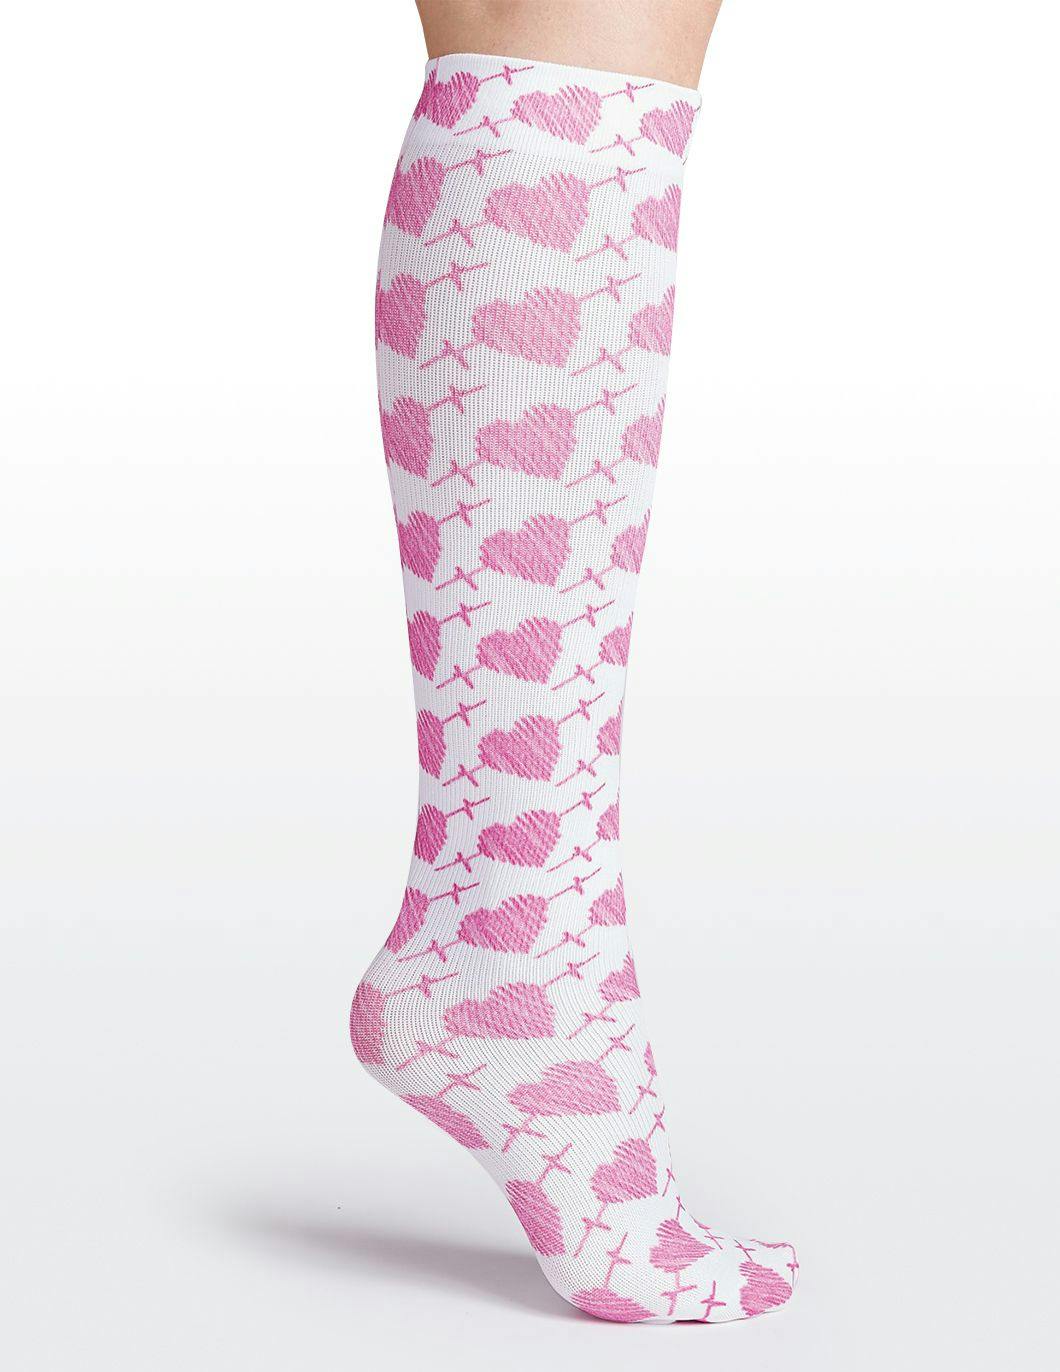 cutieful-compression-socks-10-18-mmhg-ekg-hearts-print-alt